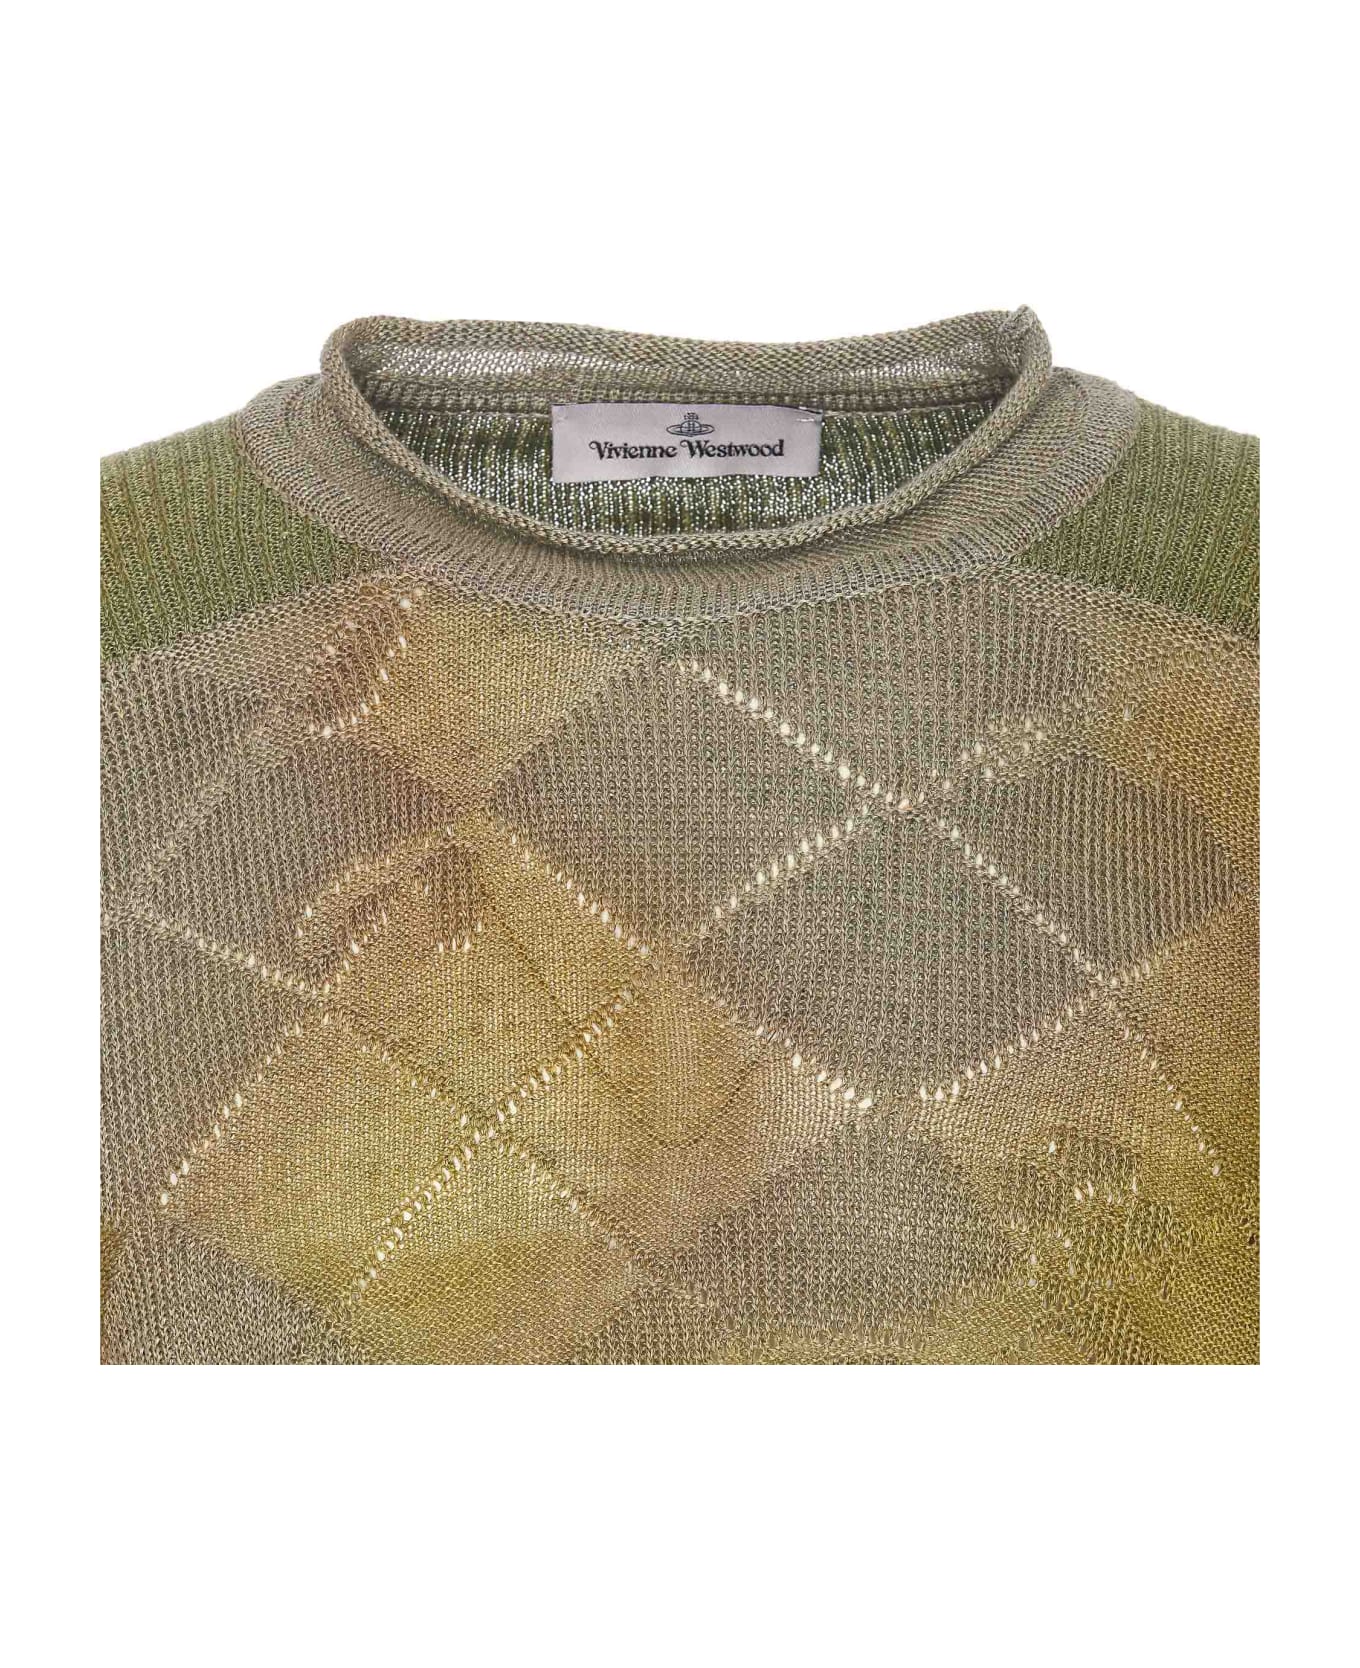 Vivienne Westwood Knit Pearl Sweater - Green